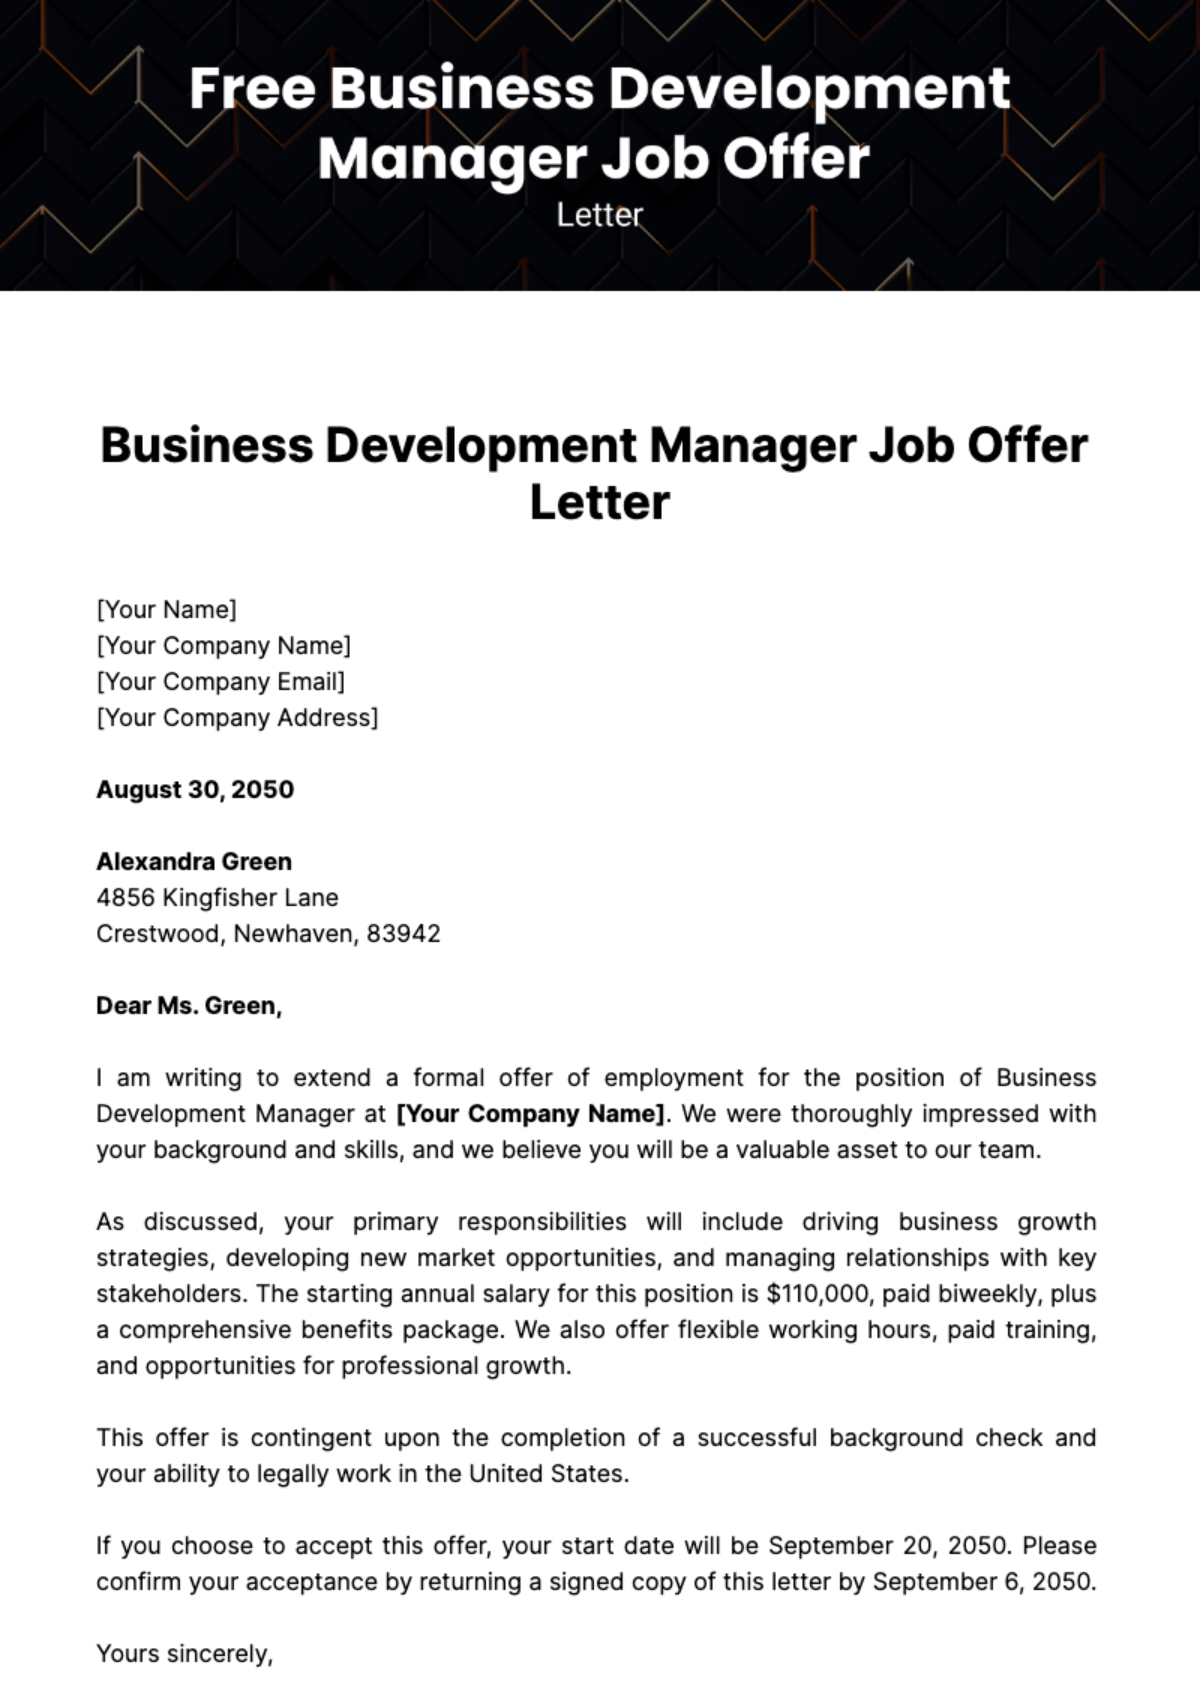 Free Business Development Manager Job Offer Letter Template